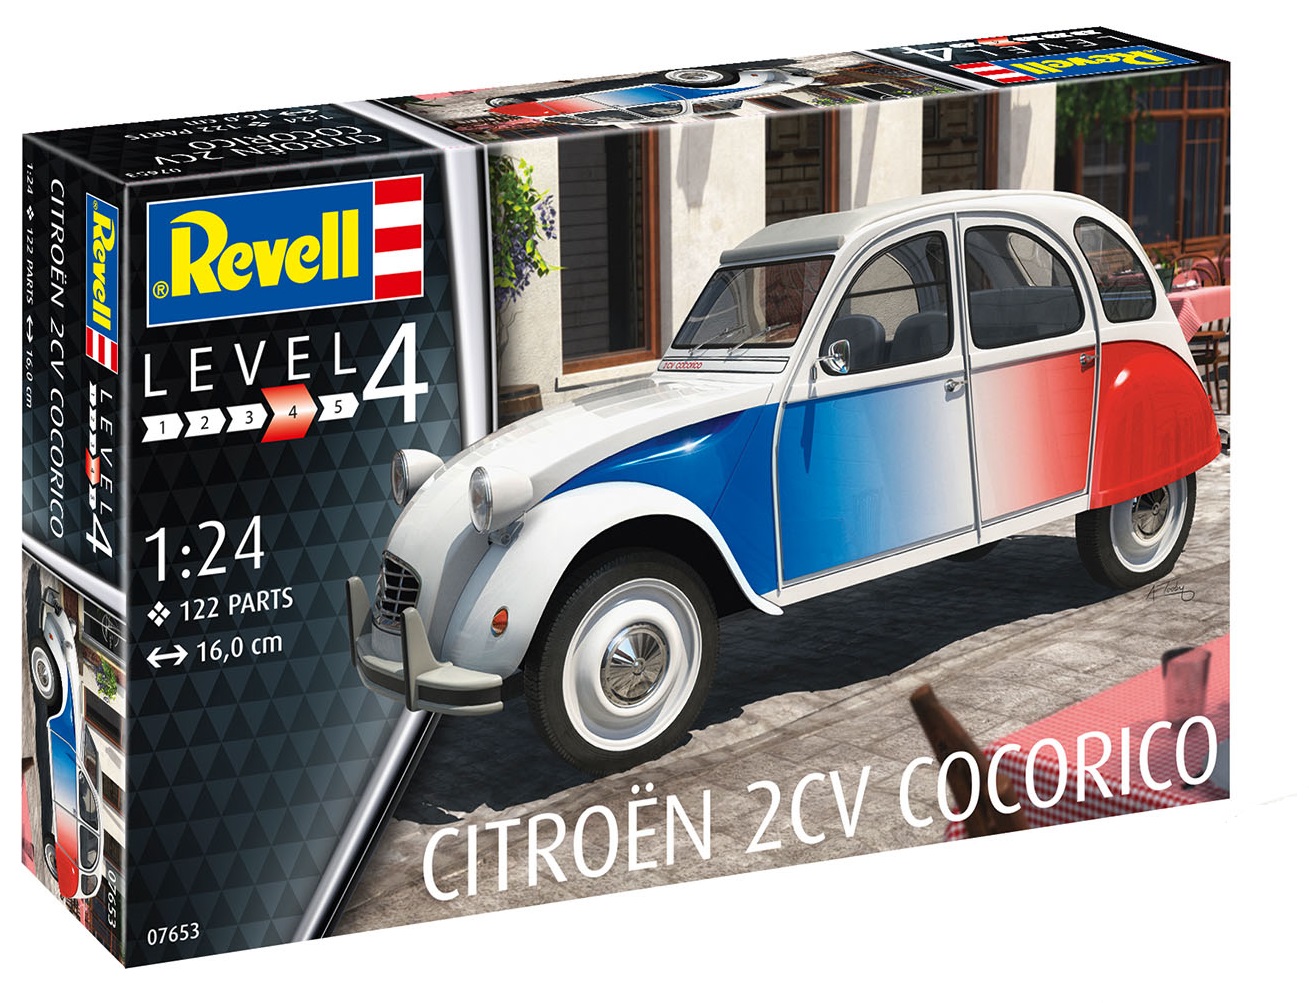 Сборная модель ретро автомобиля Citroën 2 CV Cocorico, масштаб 1:24, Revell 07653. # 1 hobbyplus.ru